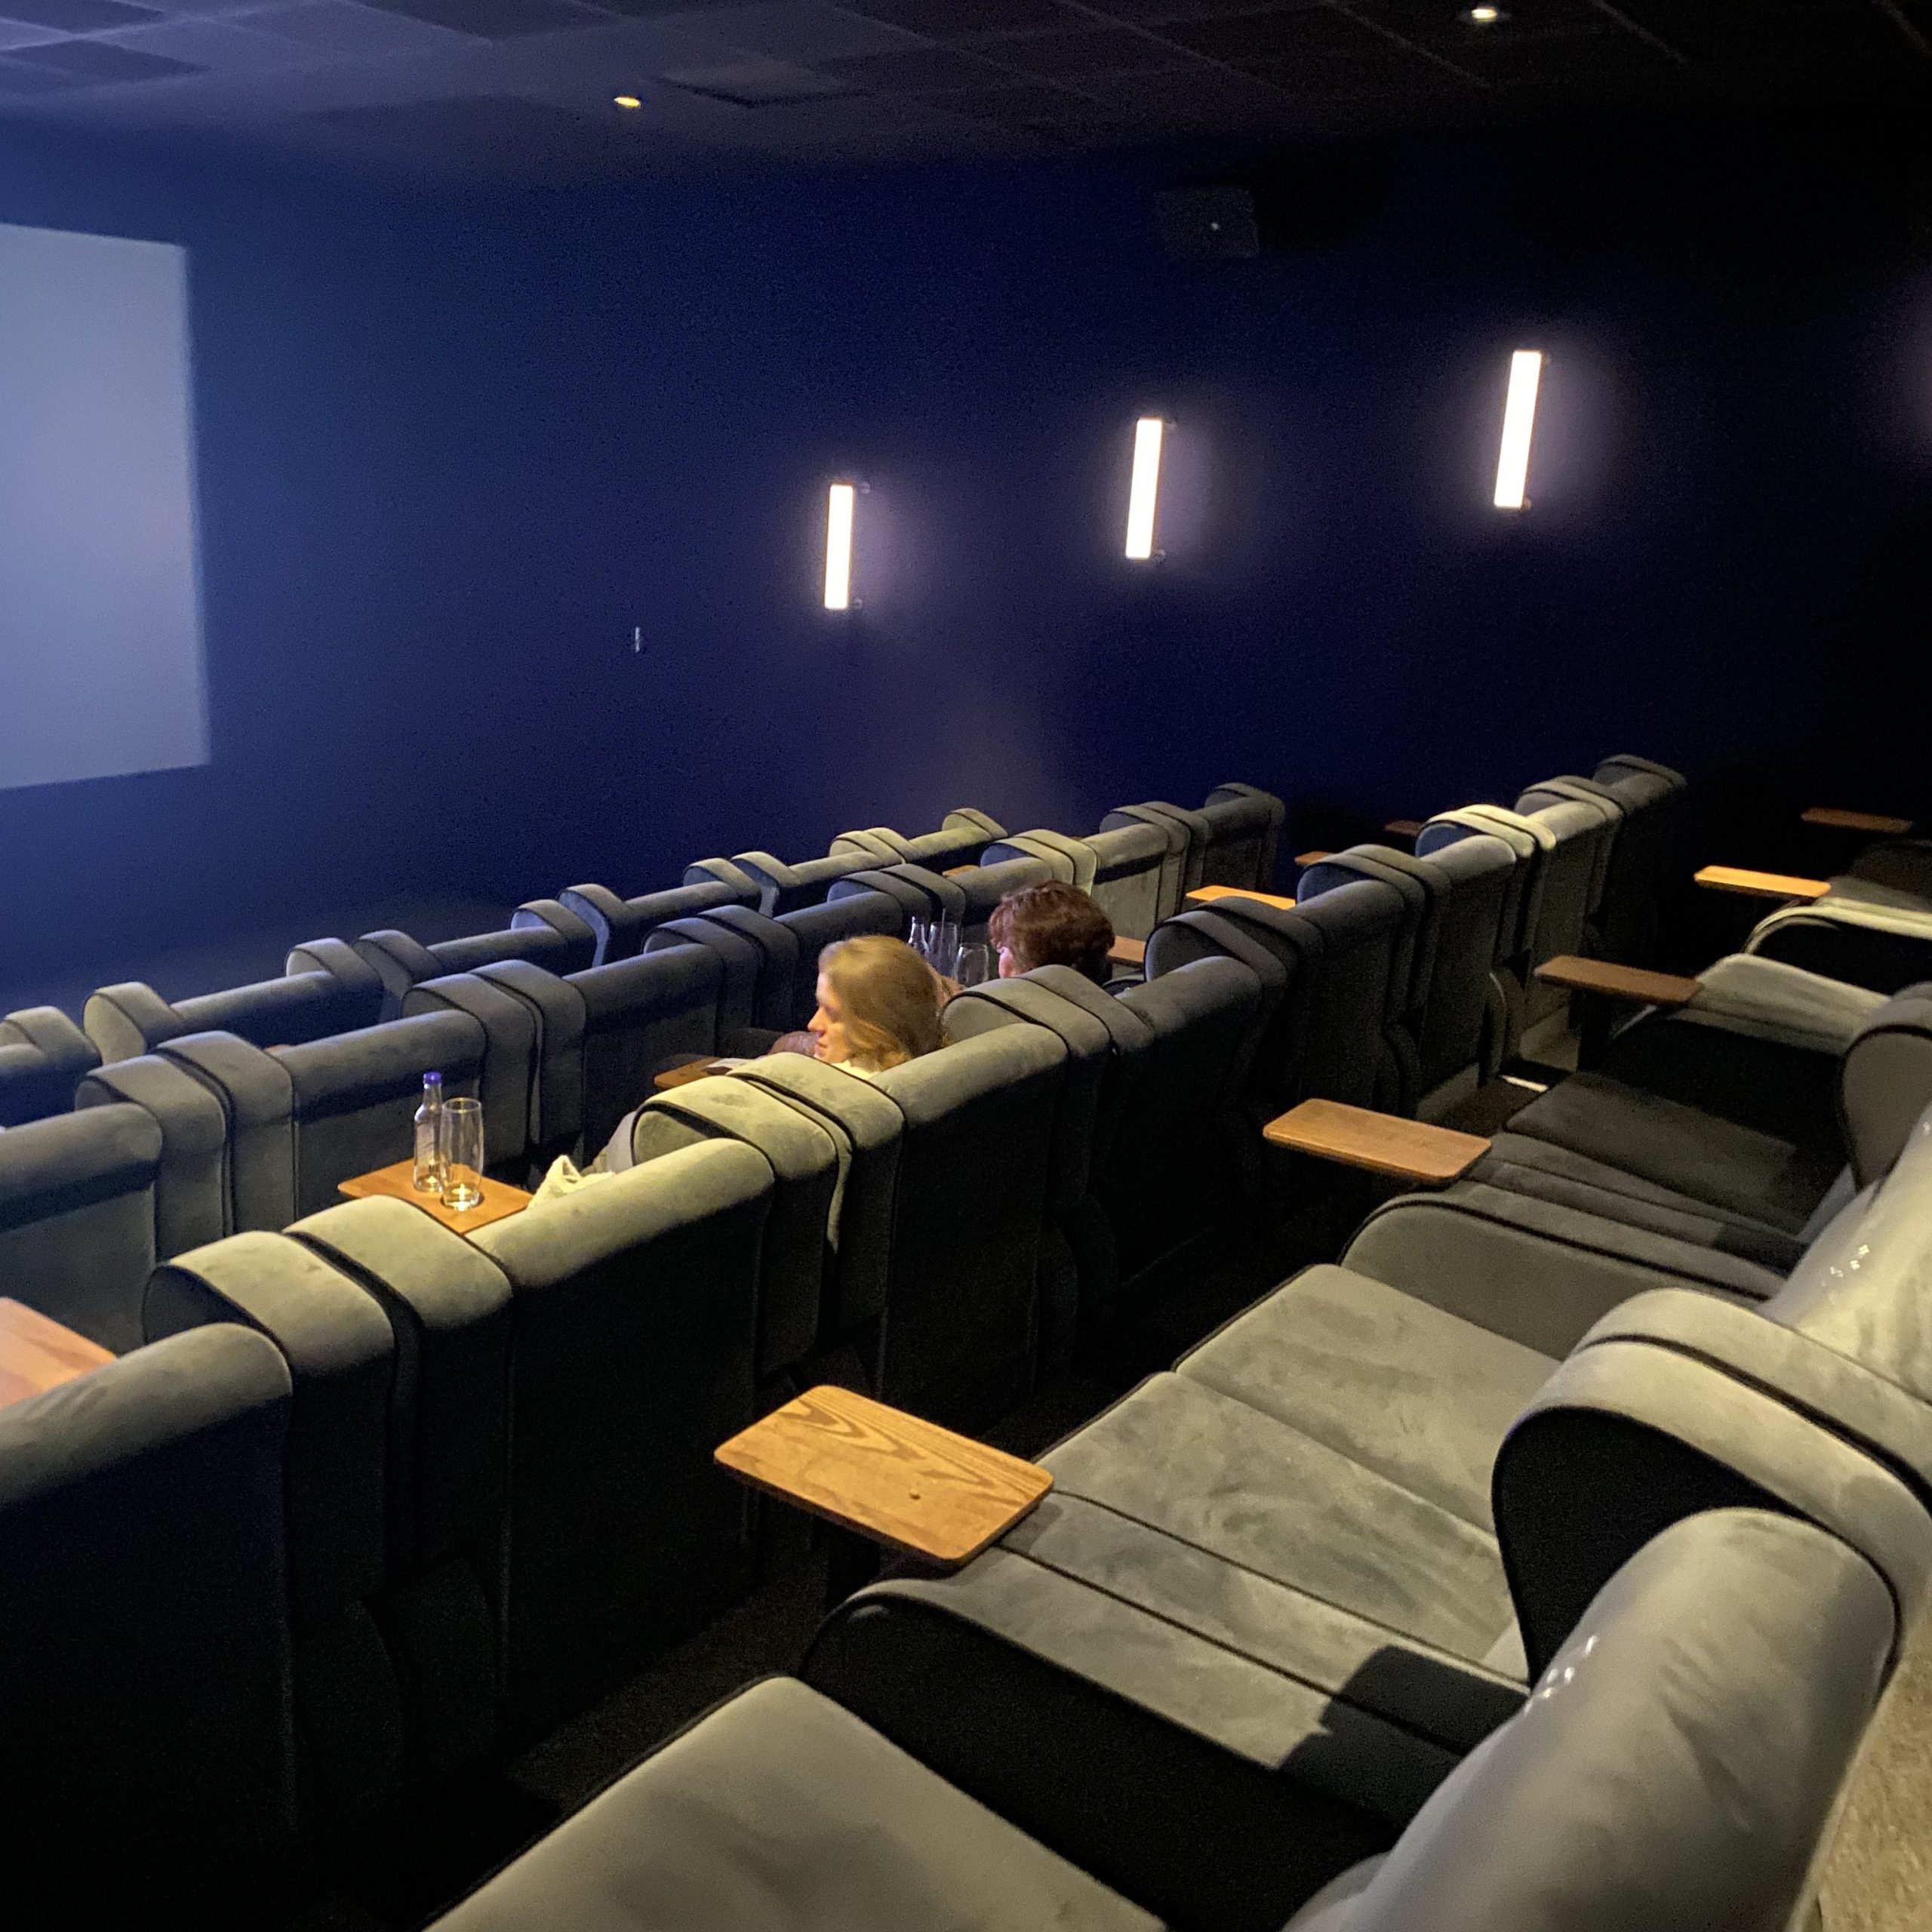 Seats in the cinemas